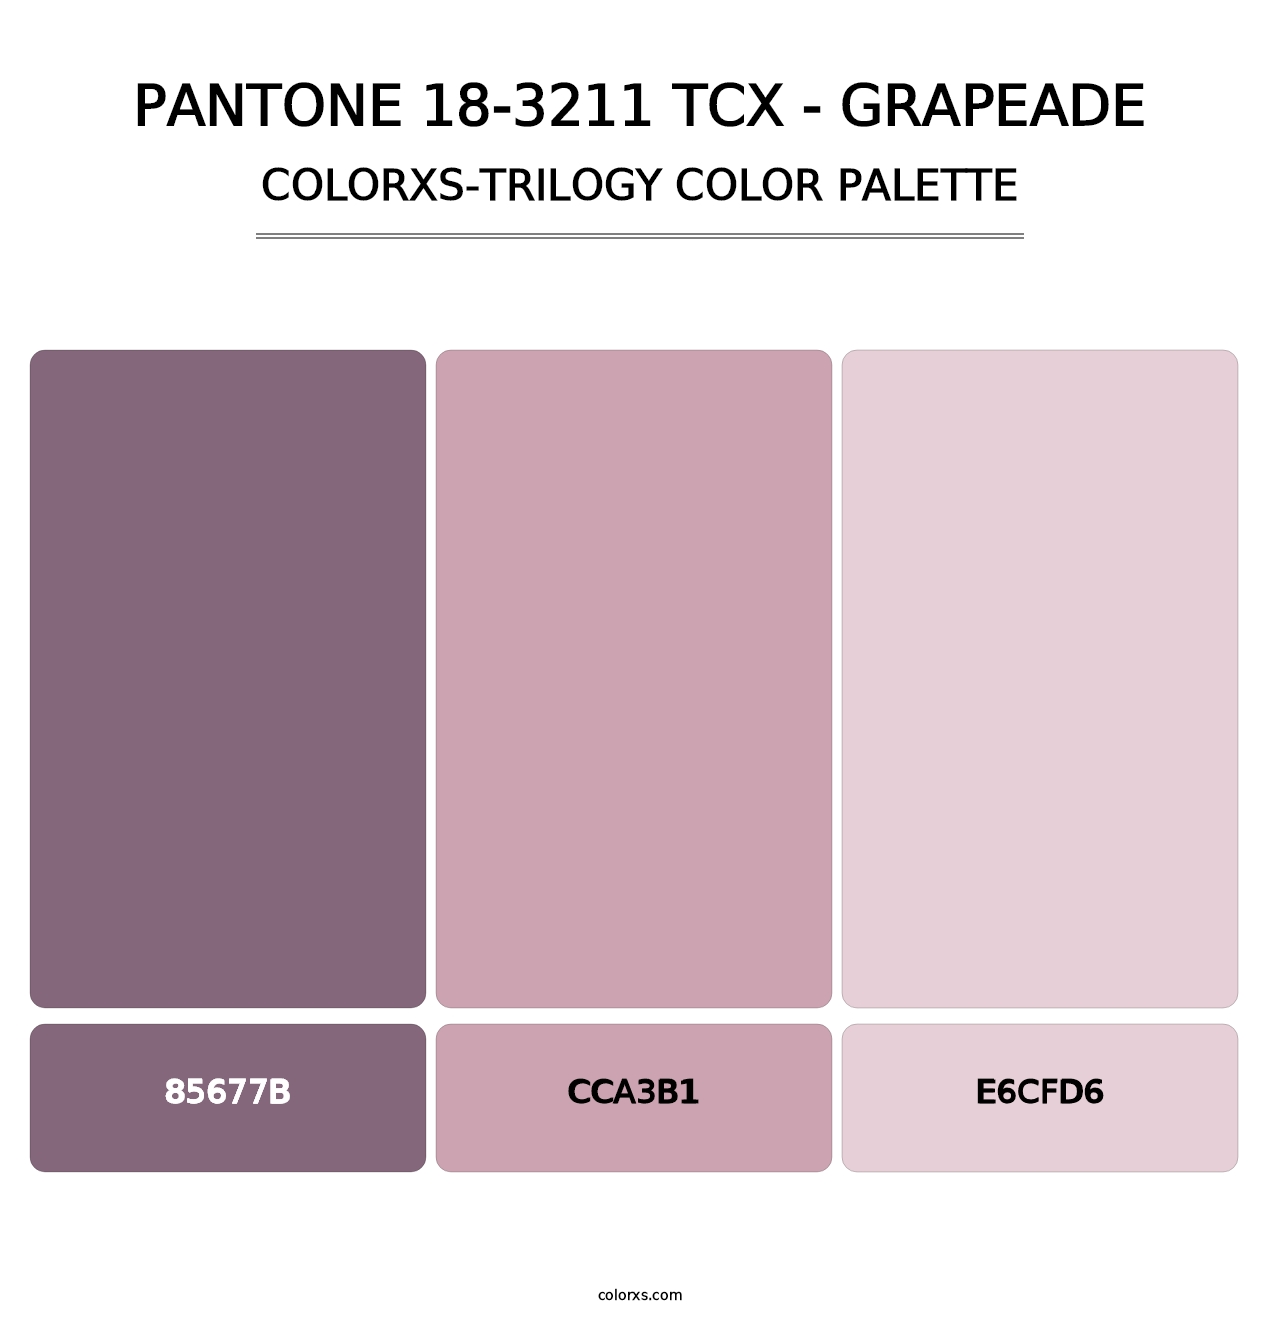 PANTONE 18-3211 TCX - Grapeade - Colorxs Trilogy Palette